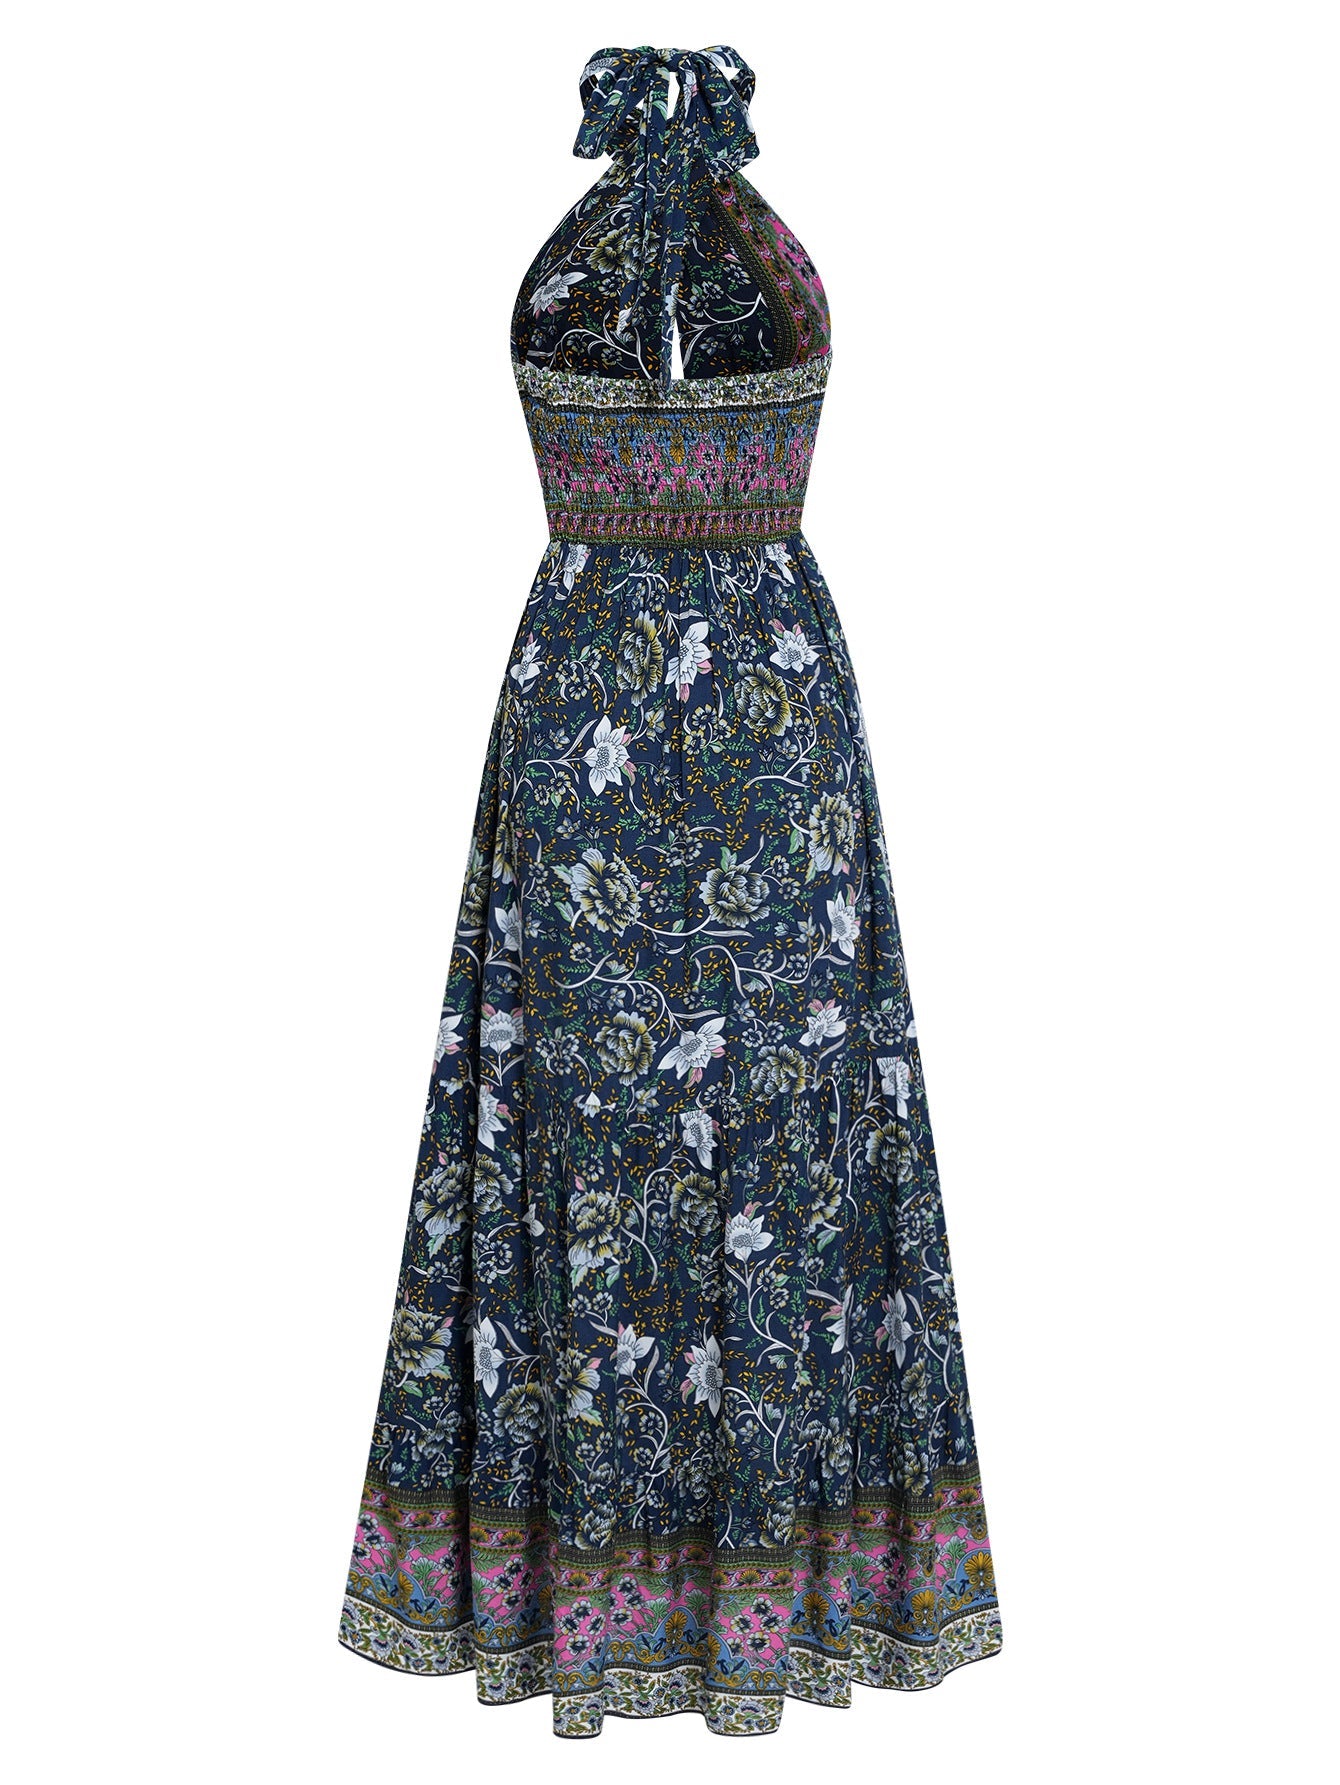 Casual Sleeveless Backless Printed Chiffon Maxi Dress